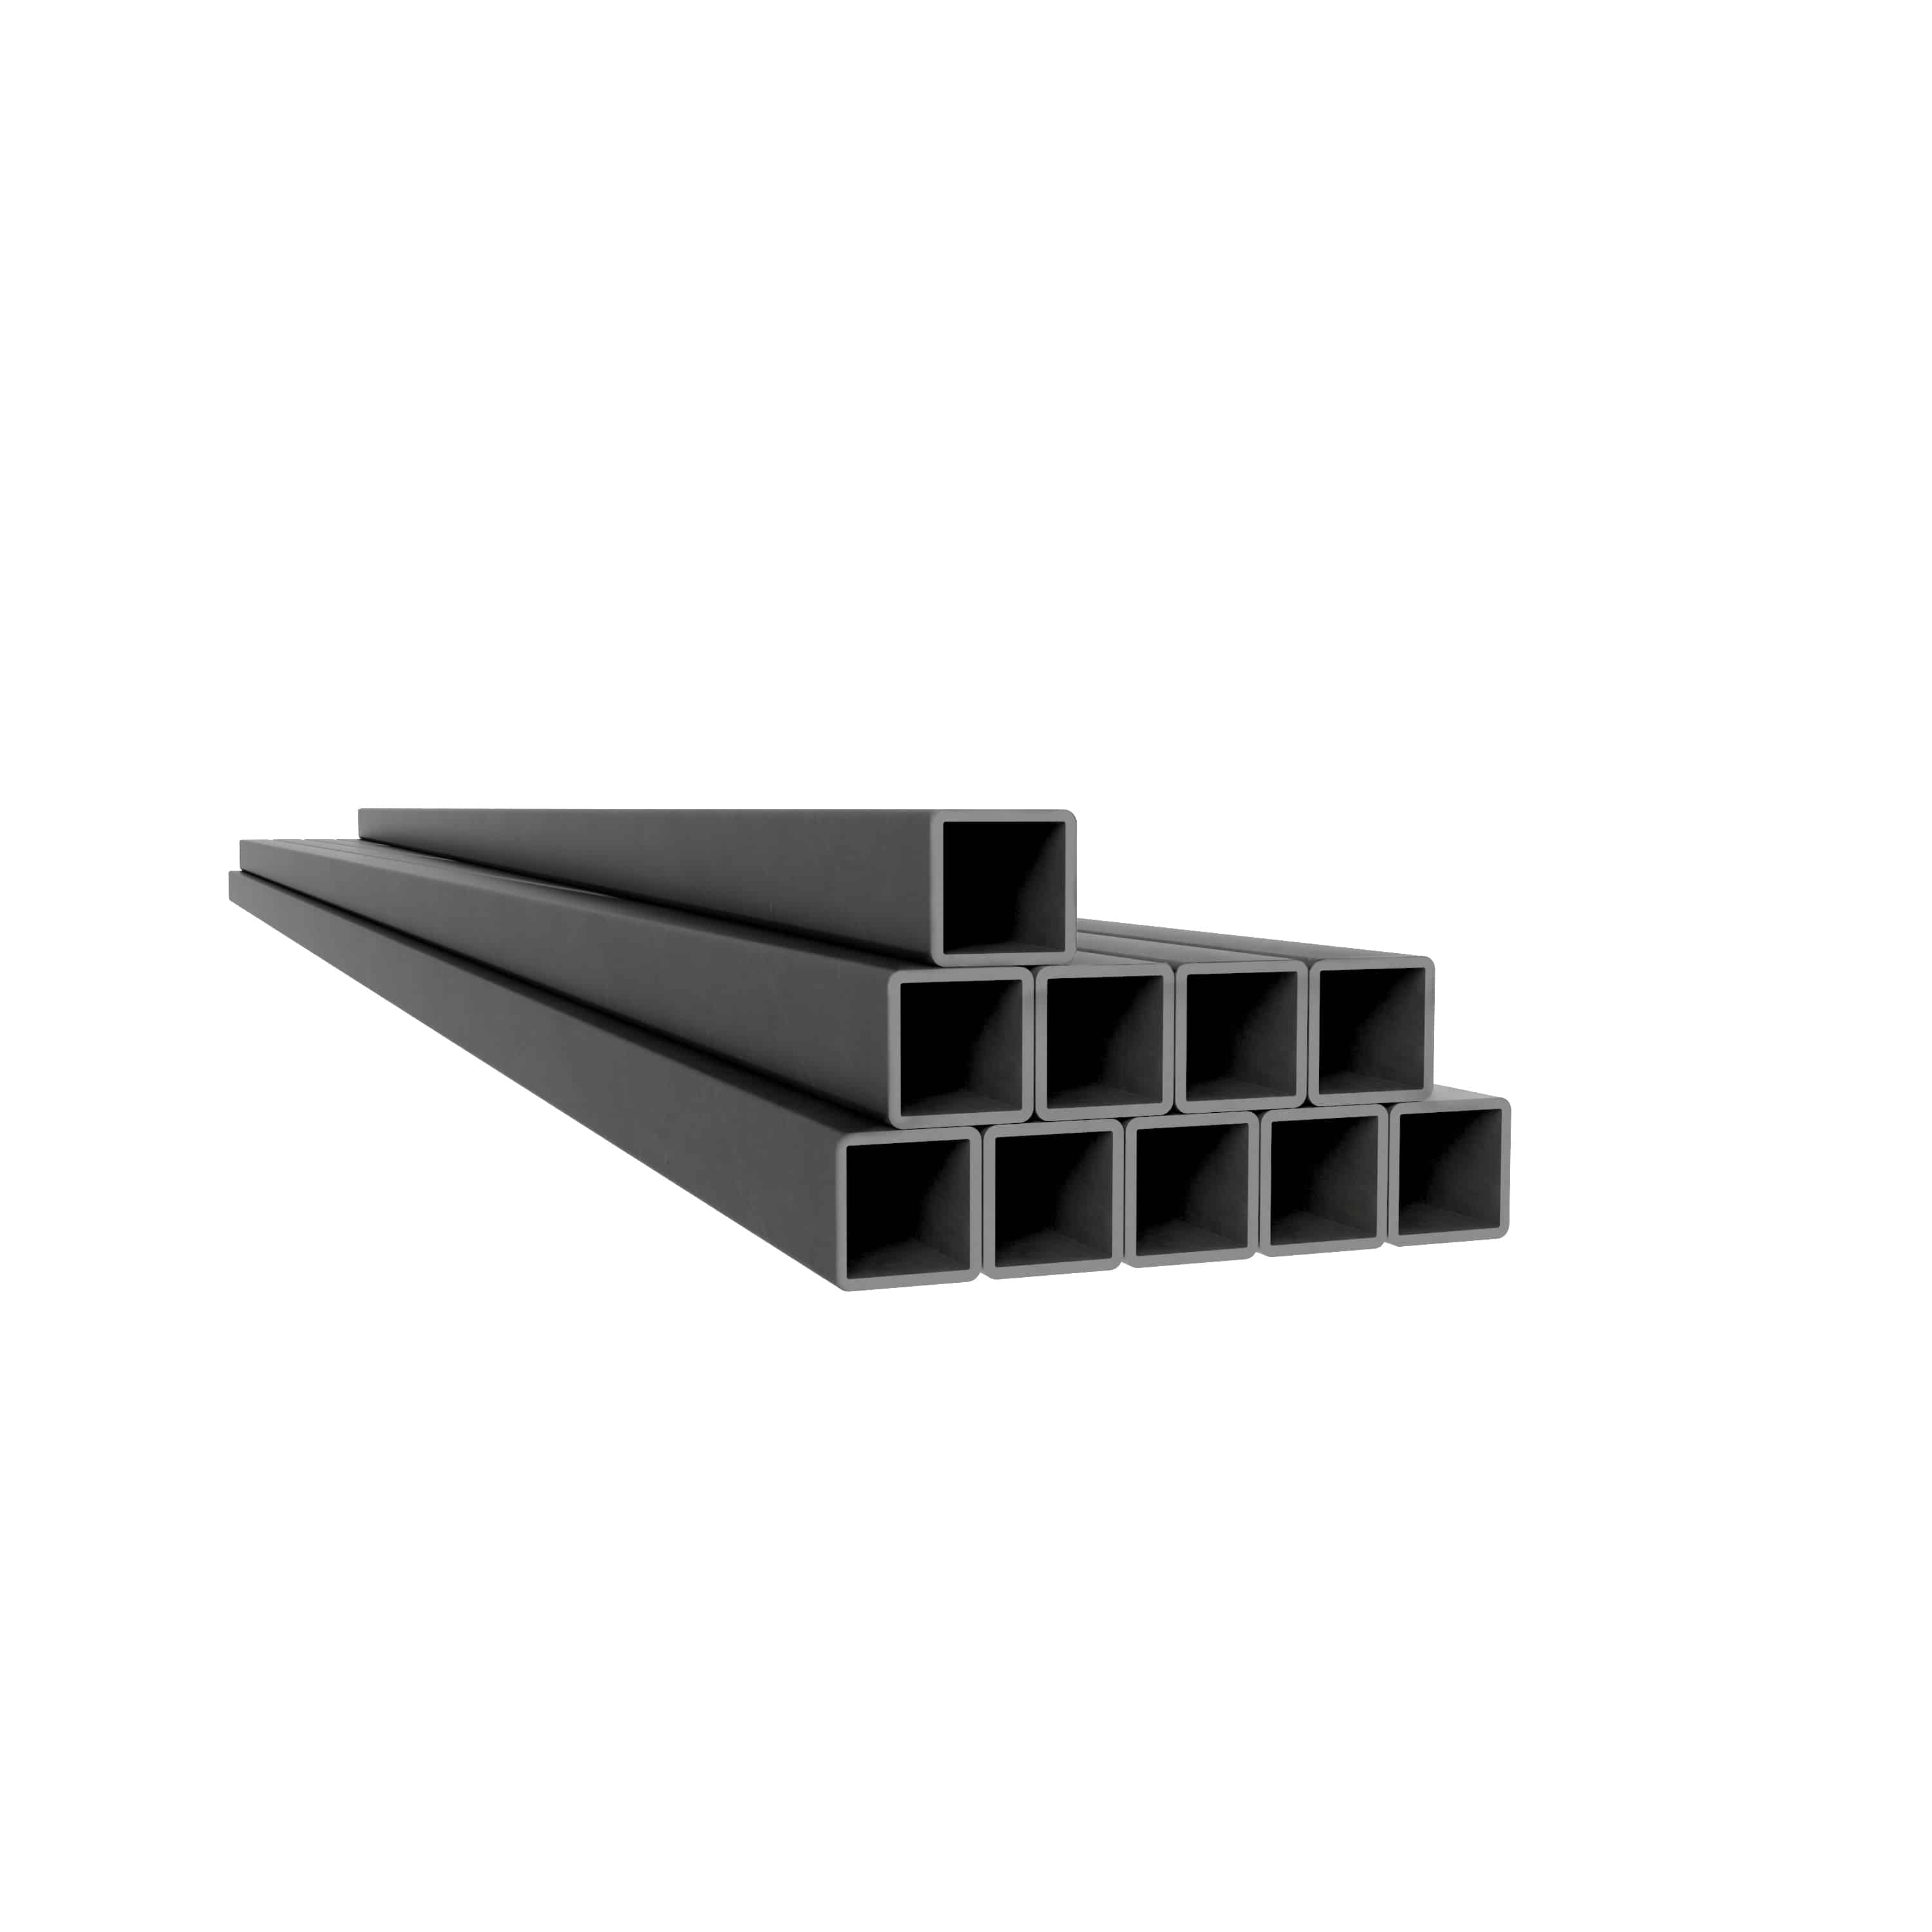 Square Pipe - Square pipe 60 x 60 x 2 mm S235-6LM, https:maxbau.ro